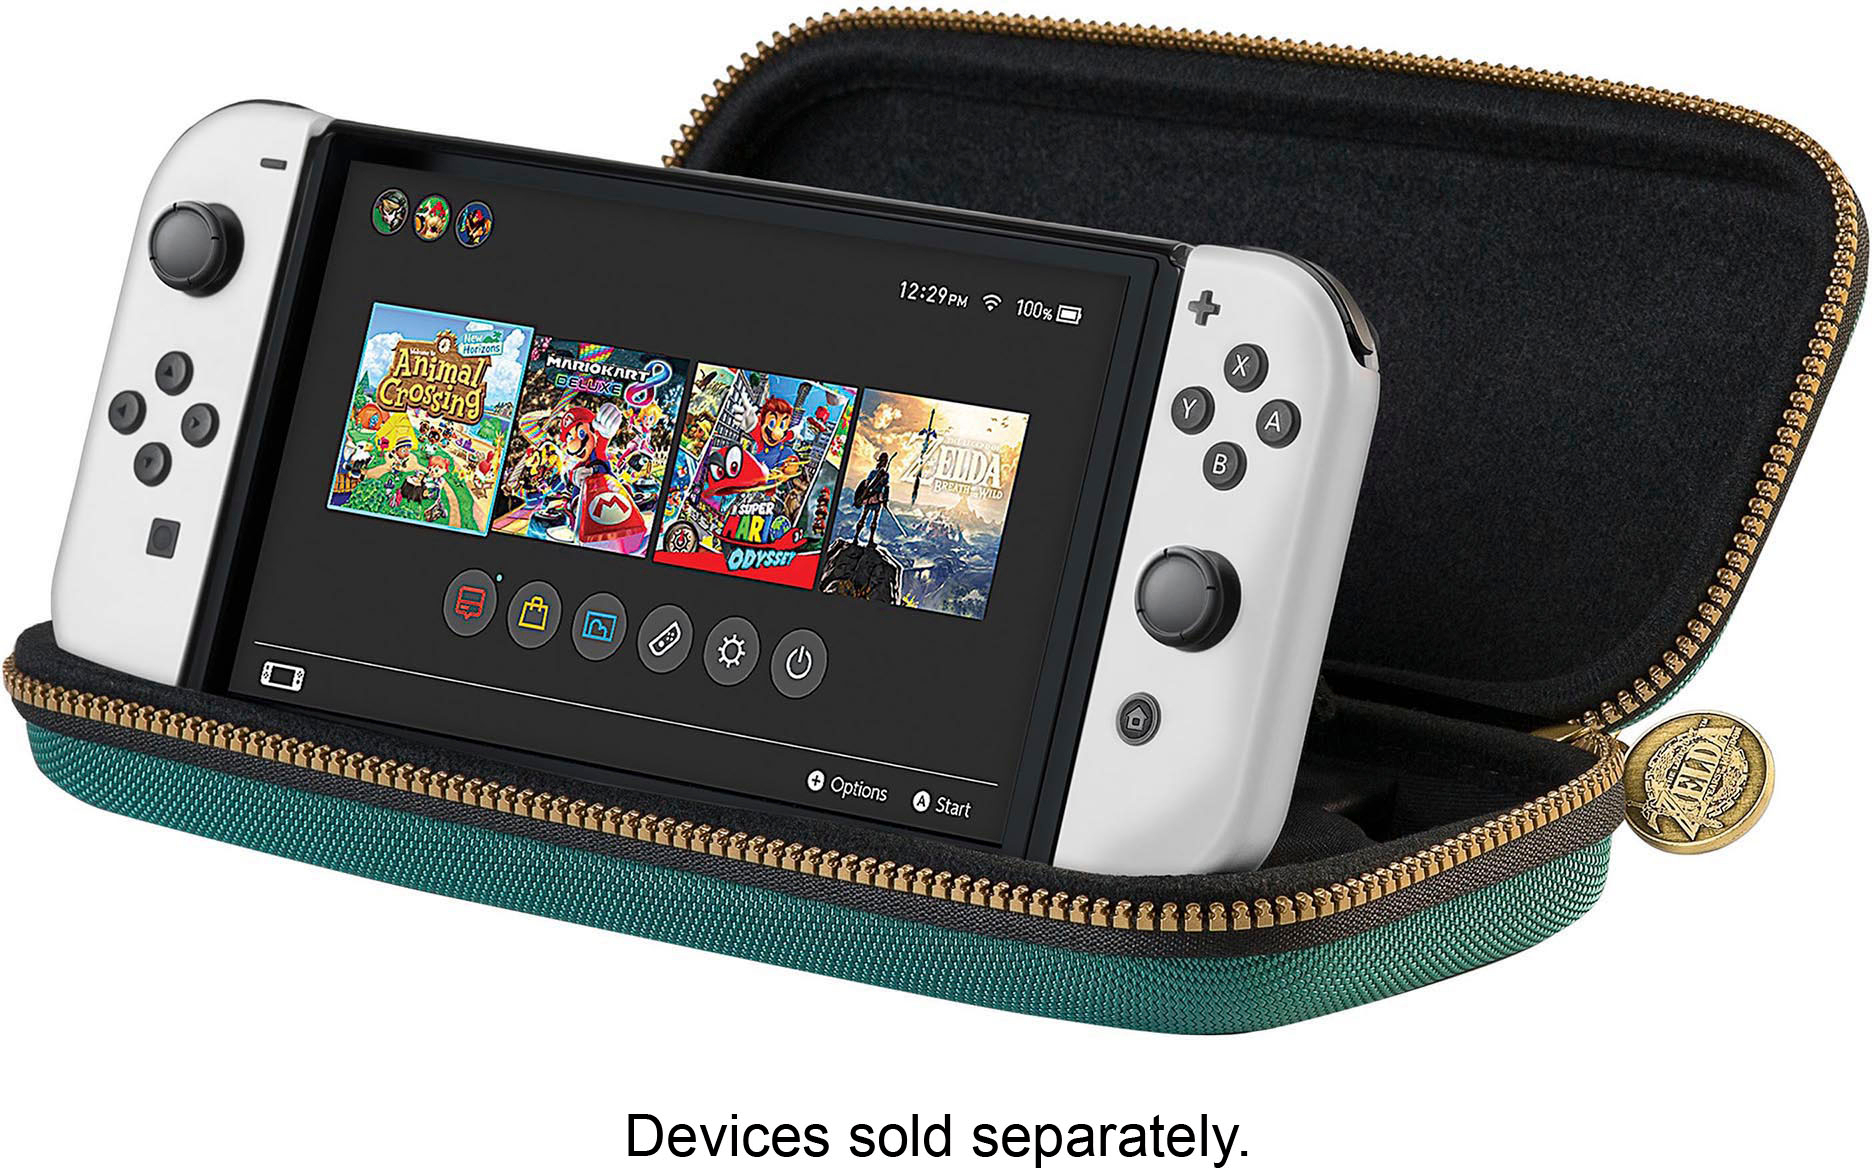 Nintendo Switch Game Traveler Deluxe Case - The Legend of Zelda Hyrule Crest